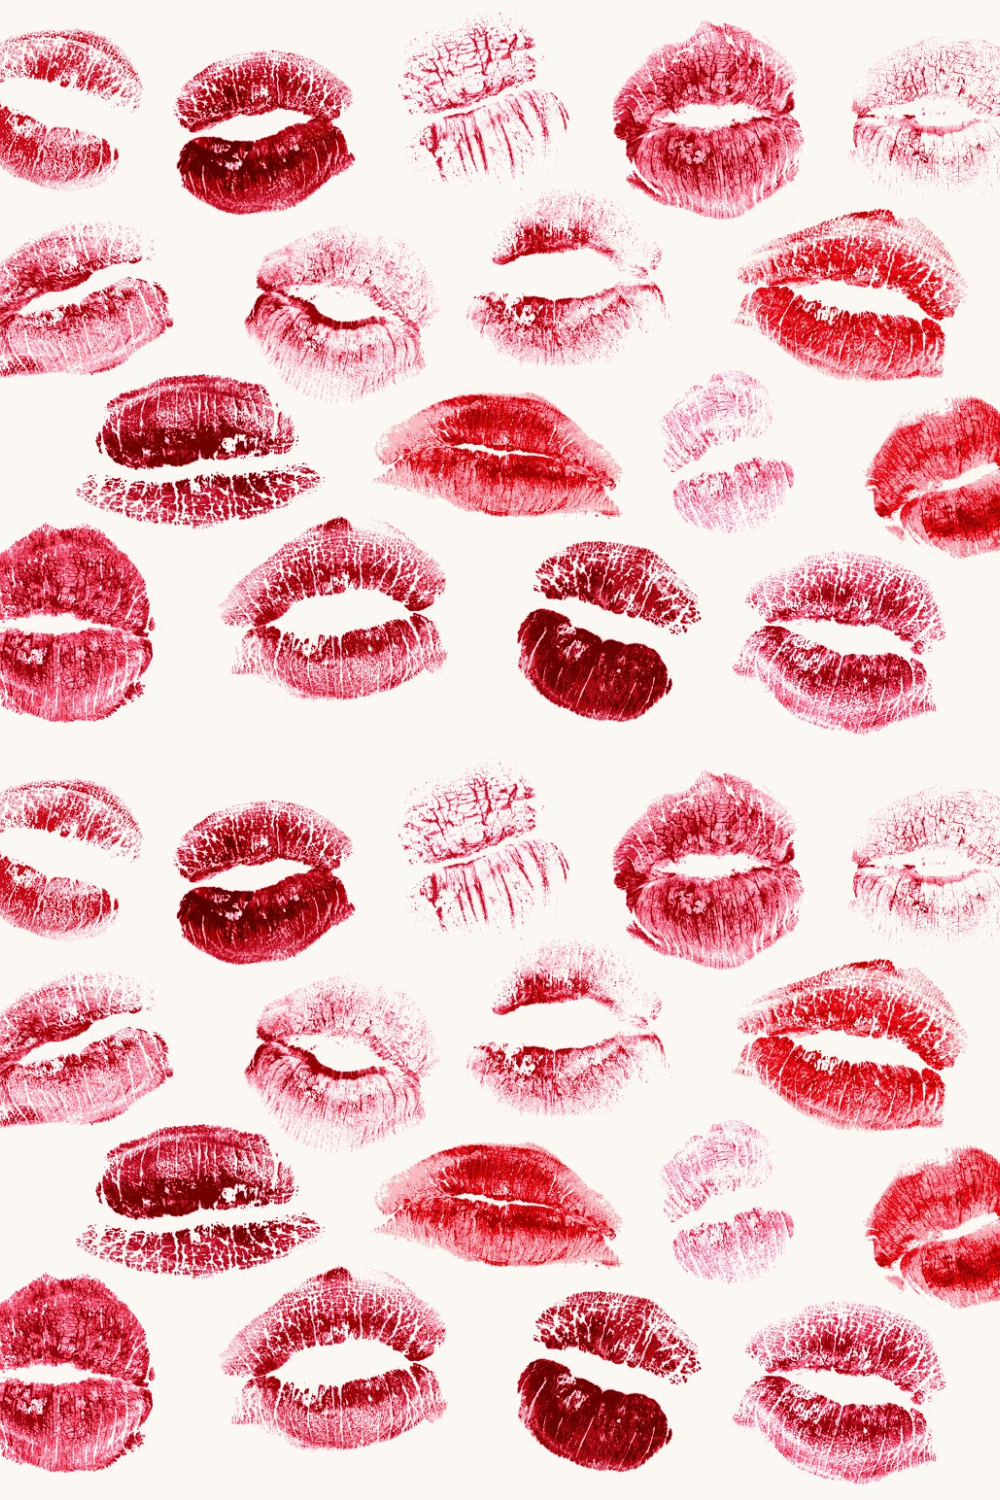 Realistic Lipstick Kisses - Pinterest.